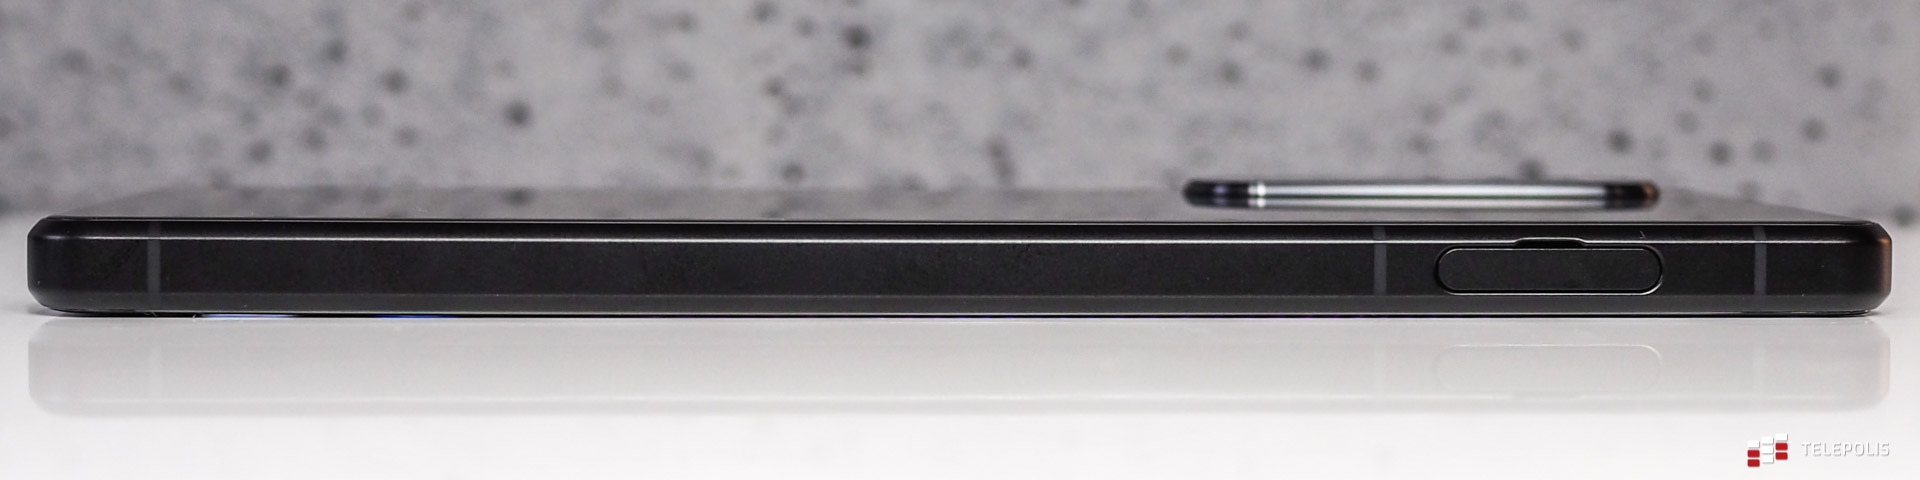 Sony Xperia 1 III lewy bok